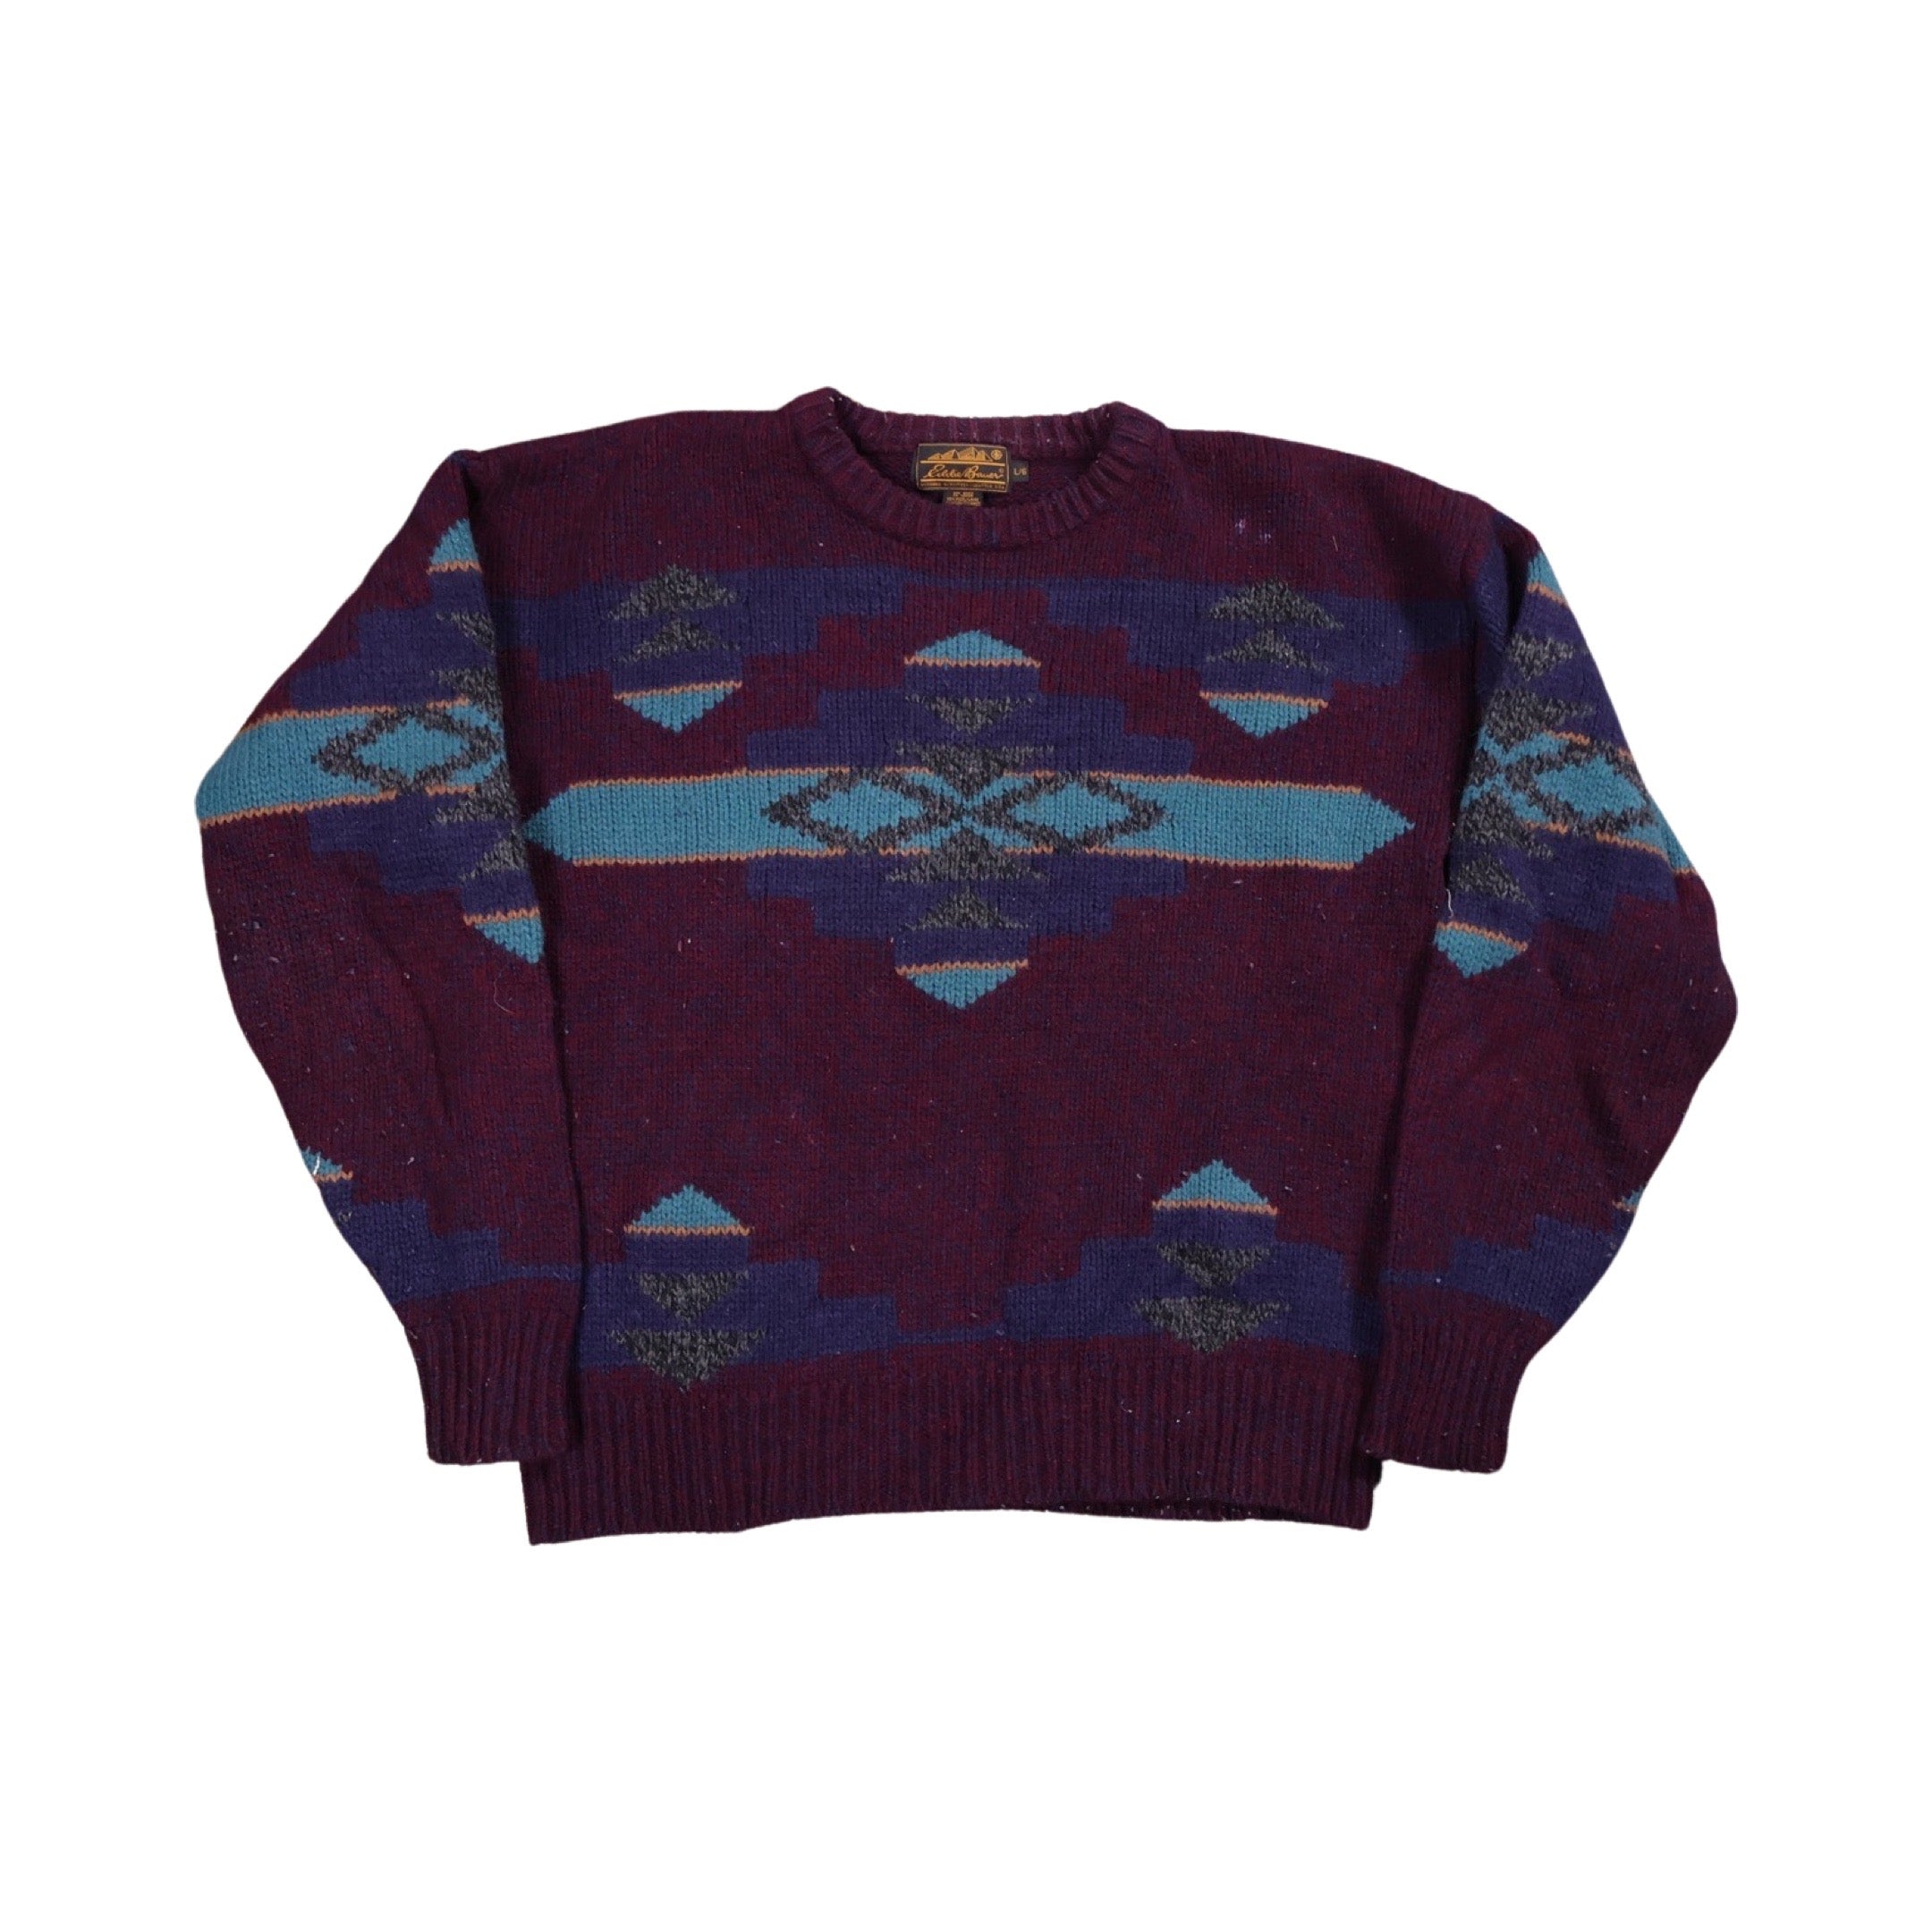 Eddie Bauer Geometric 90s Knit Sweater (Large)